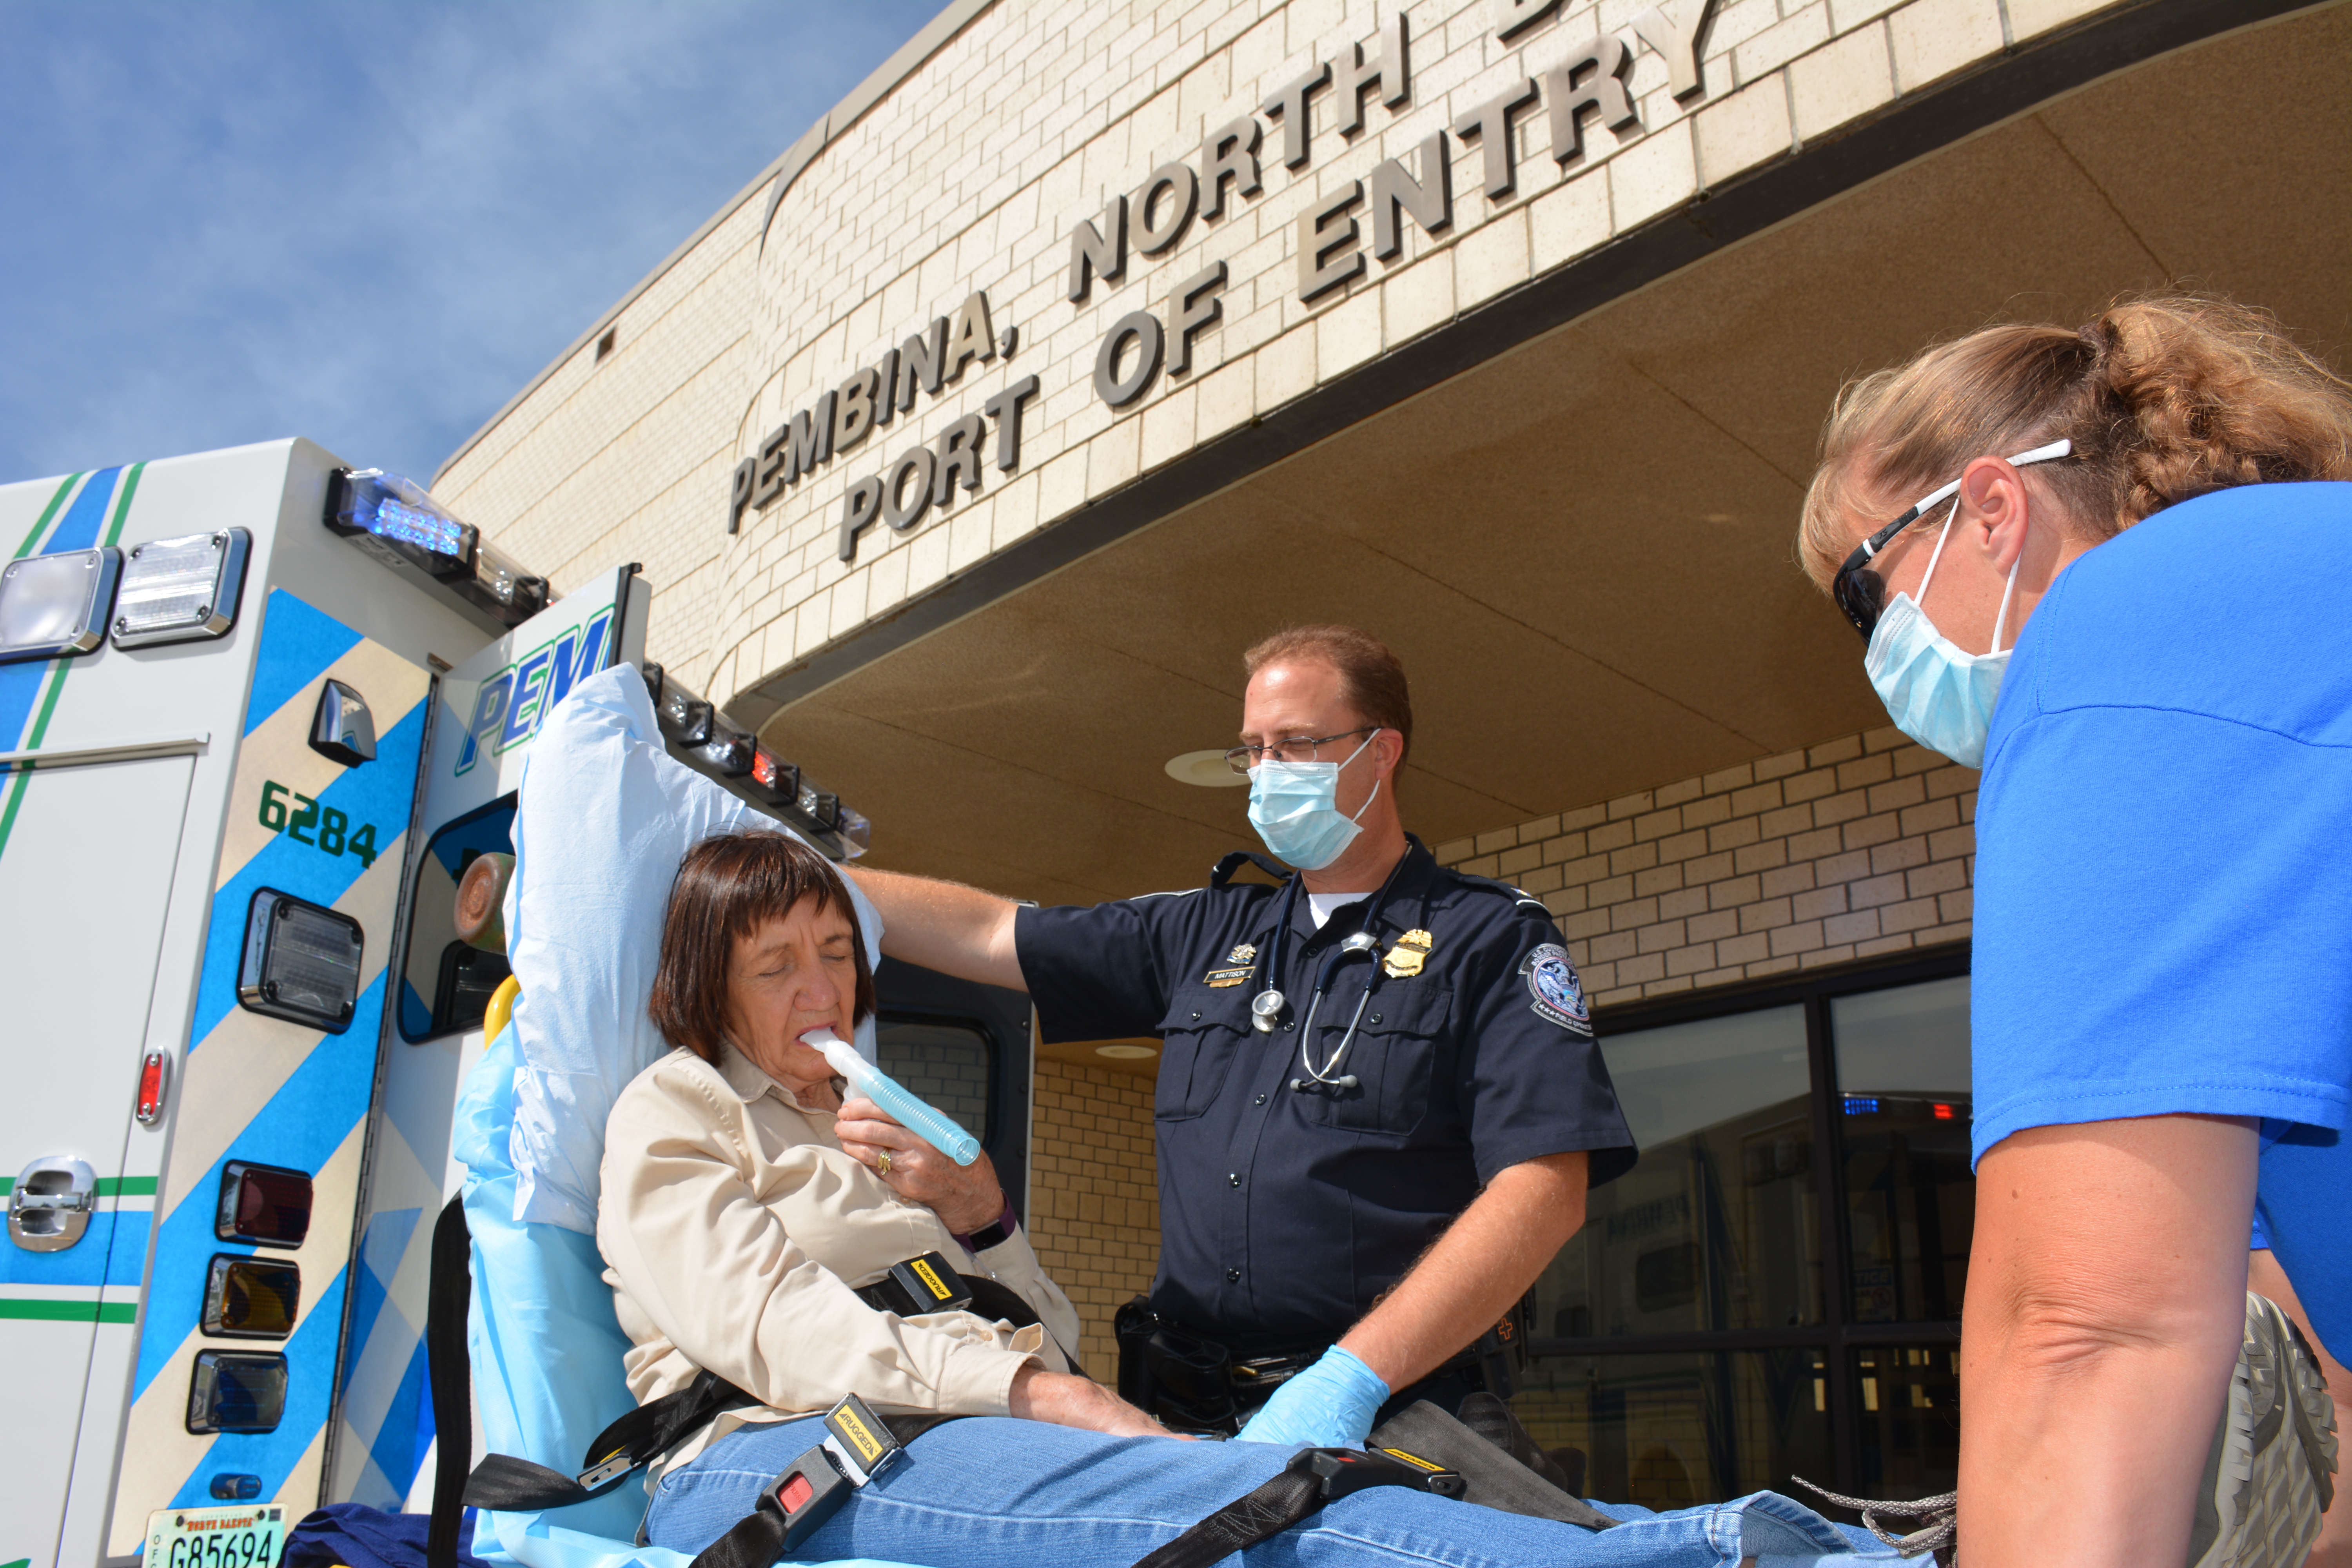 CBP Officer Jeremy Mattison helps a patient at port of Pembina, North Dakota.